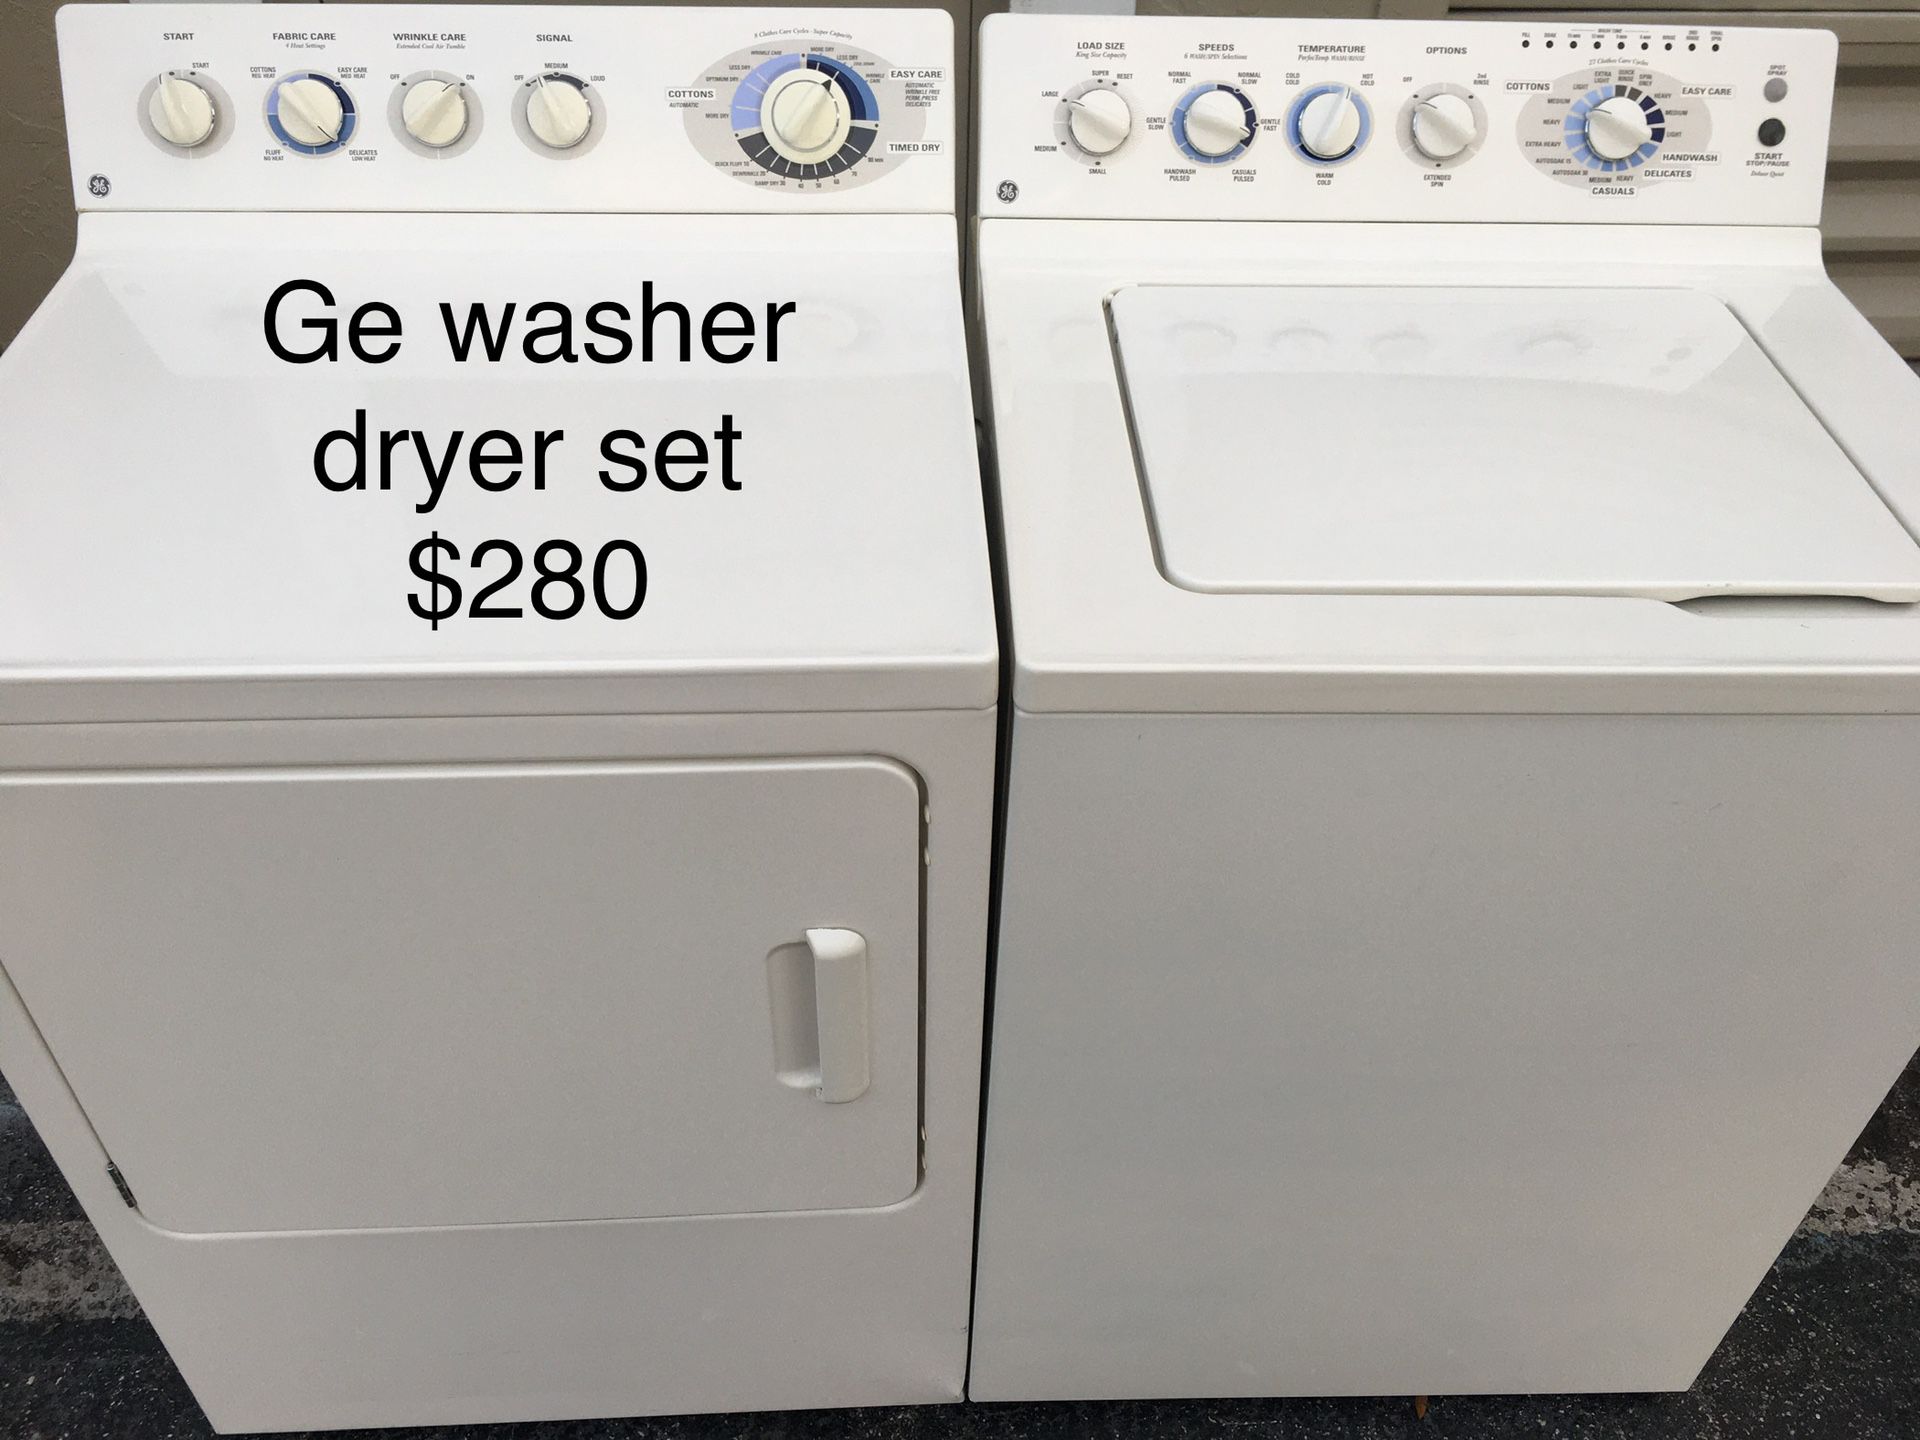 Ge washer dryer set / lavadora secadora